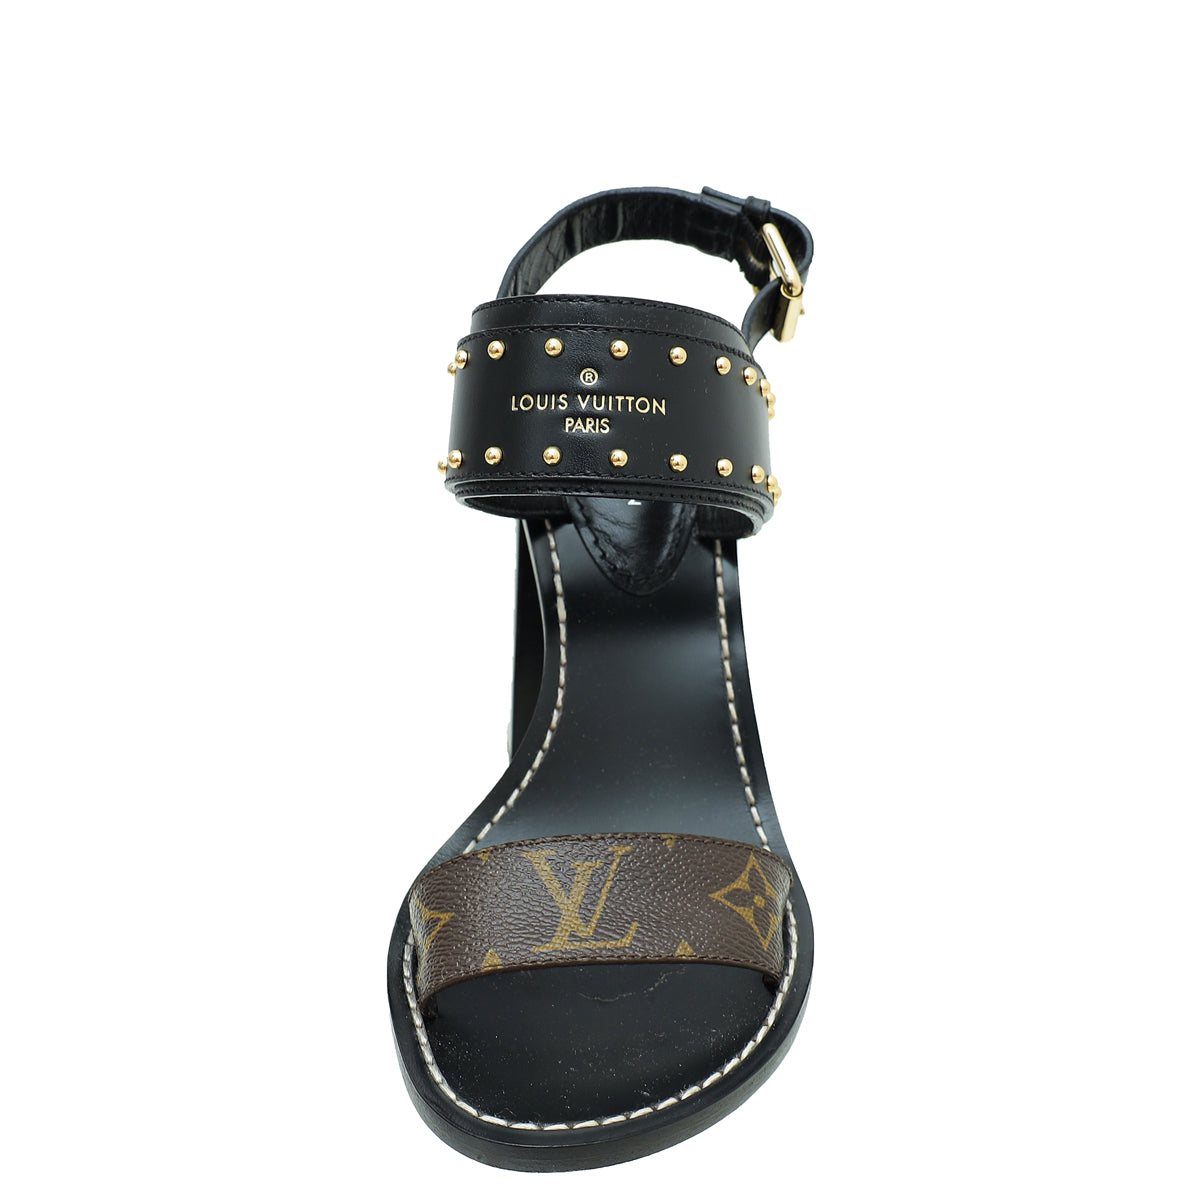 Replica Louis Vuitton Nomad Sandals Monogram Studs for Sale